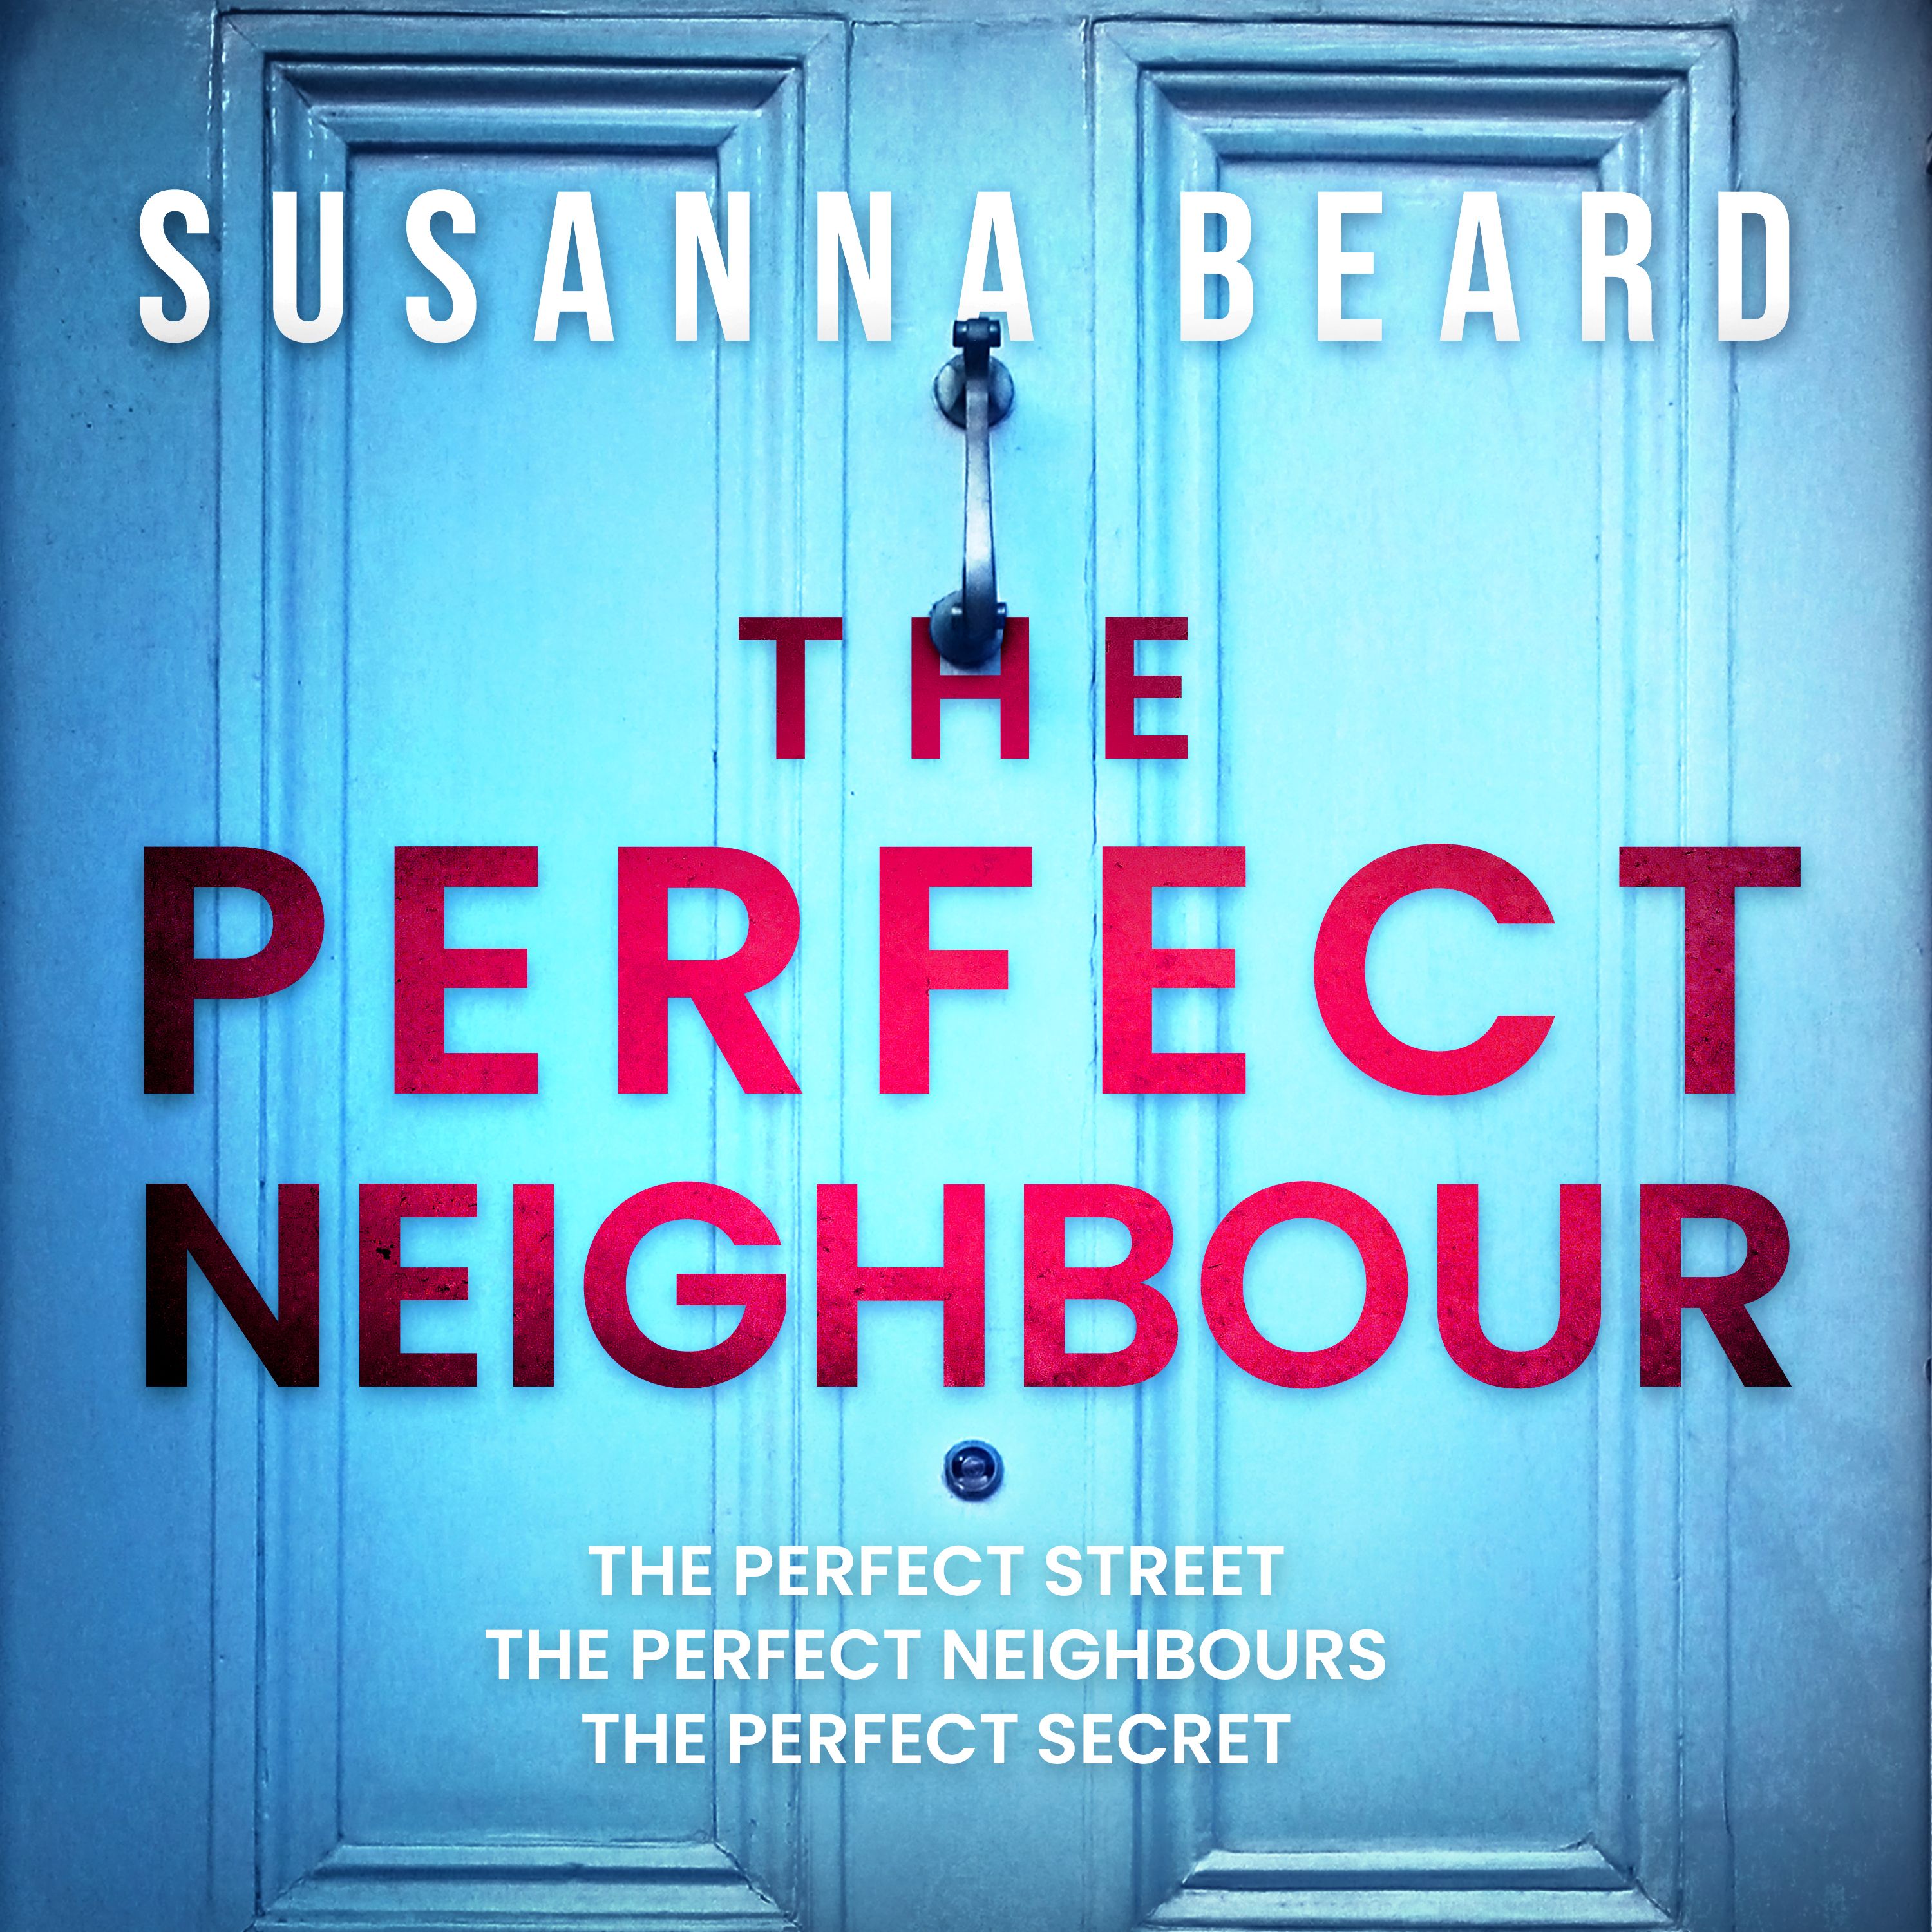 The Perfect Neighbour, ljudbok av Susanna Beard